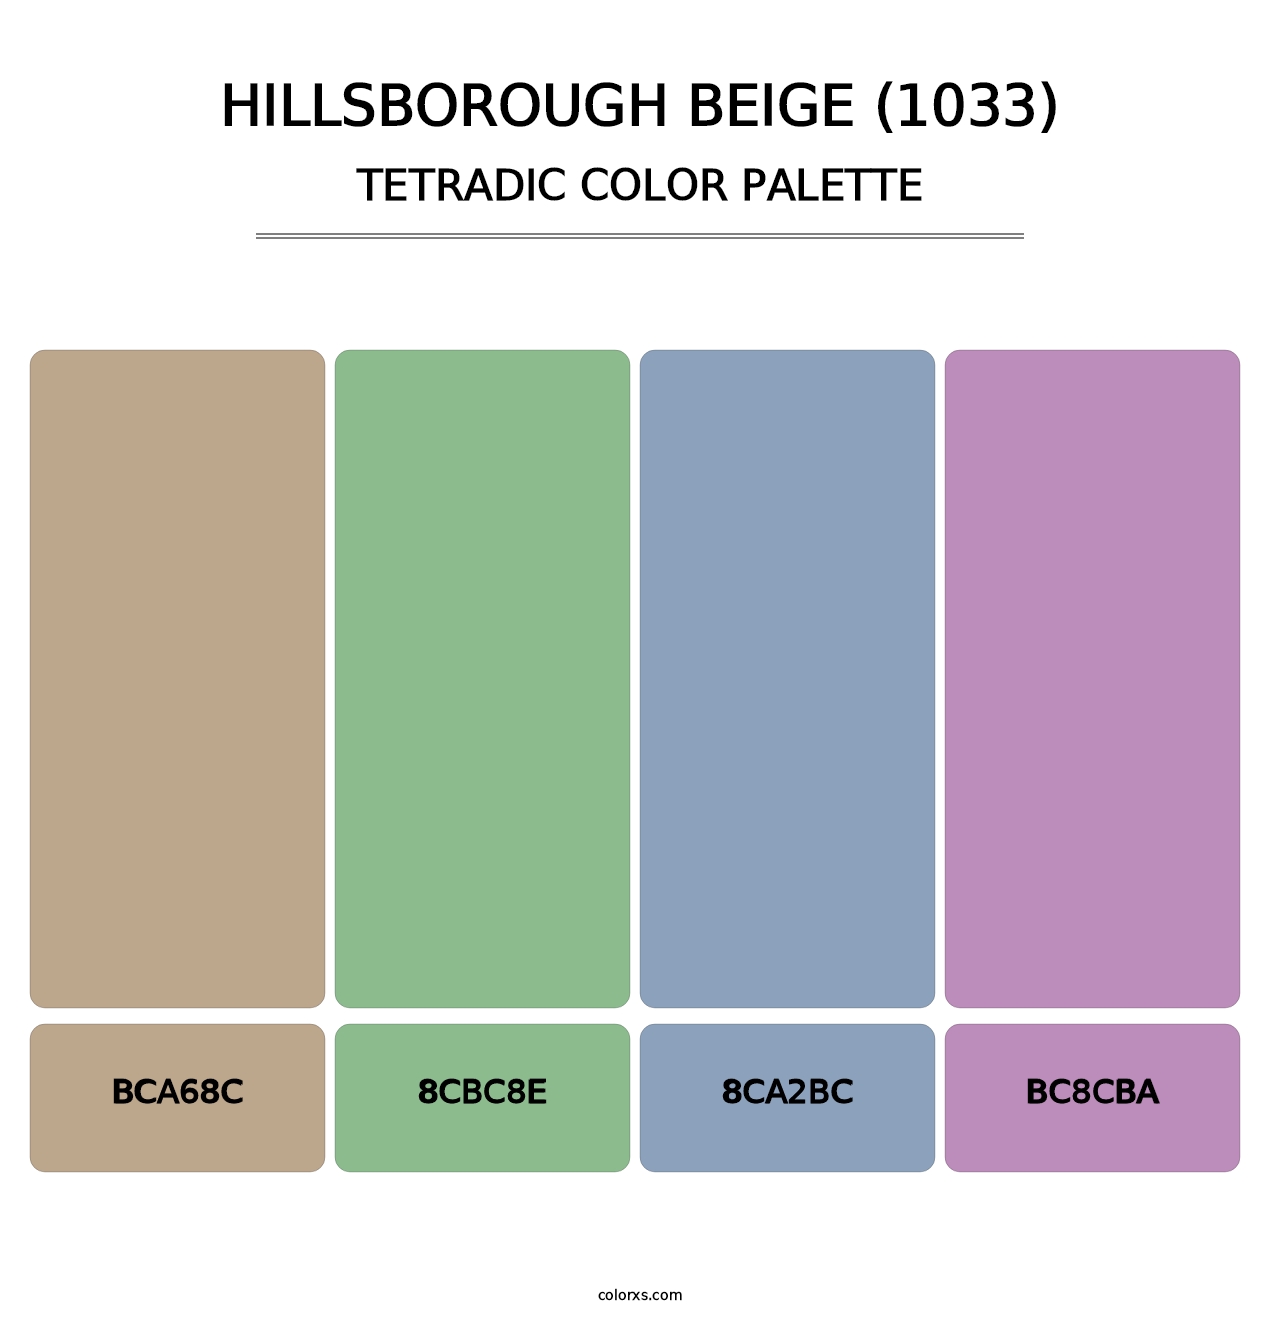 Hillsborough Beige (1033) - Tetradic Color Palette